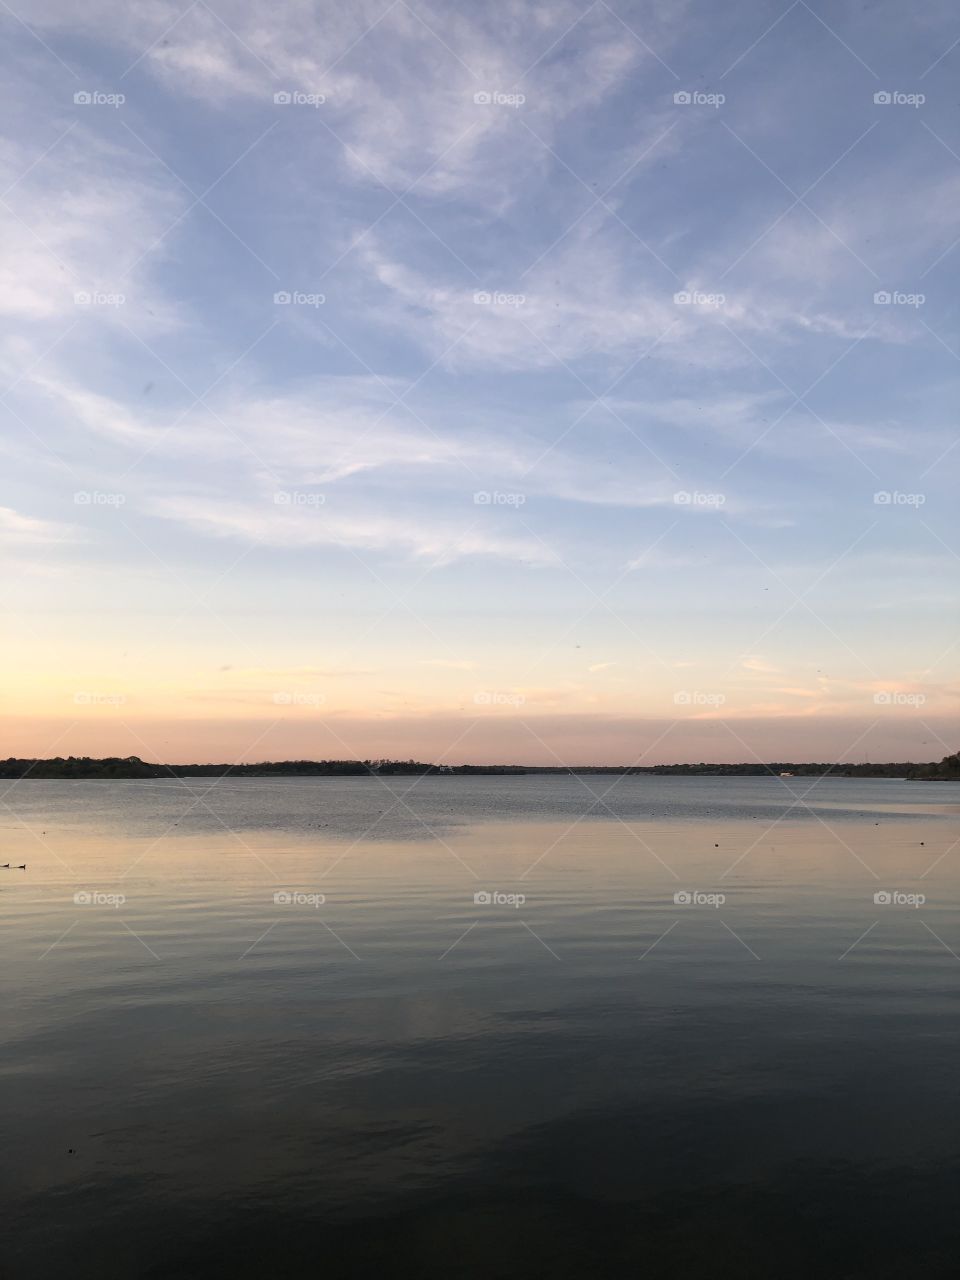 Texas sunset on a lake